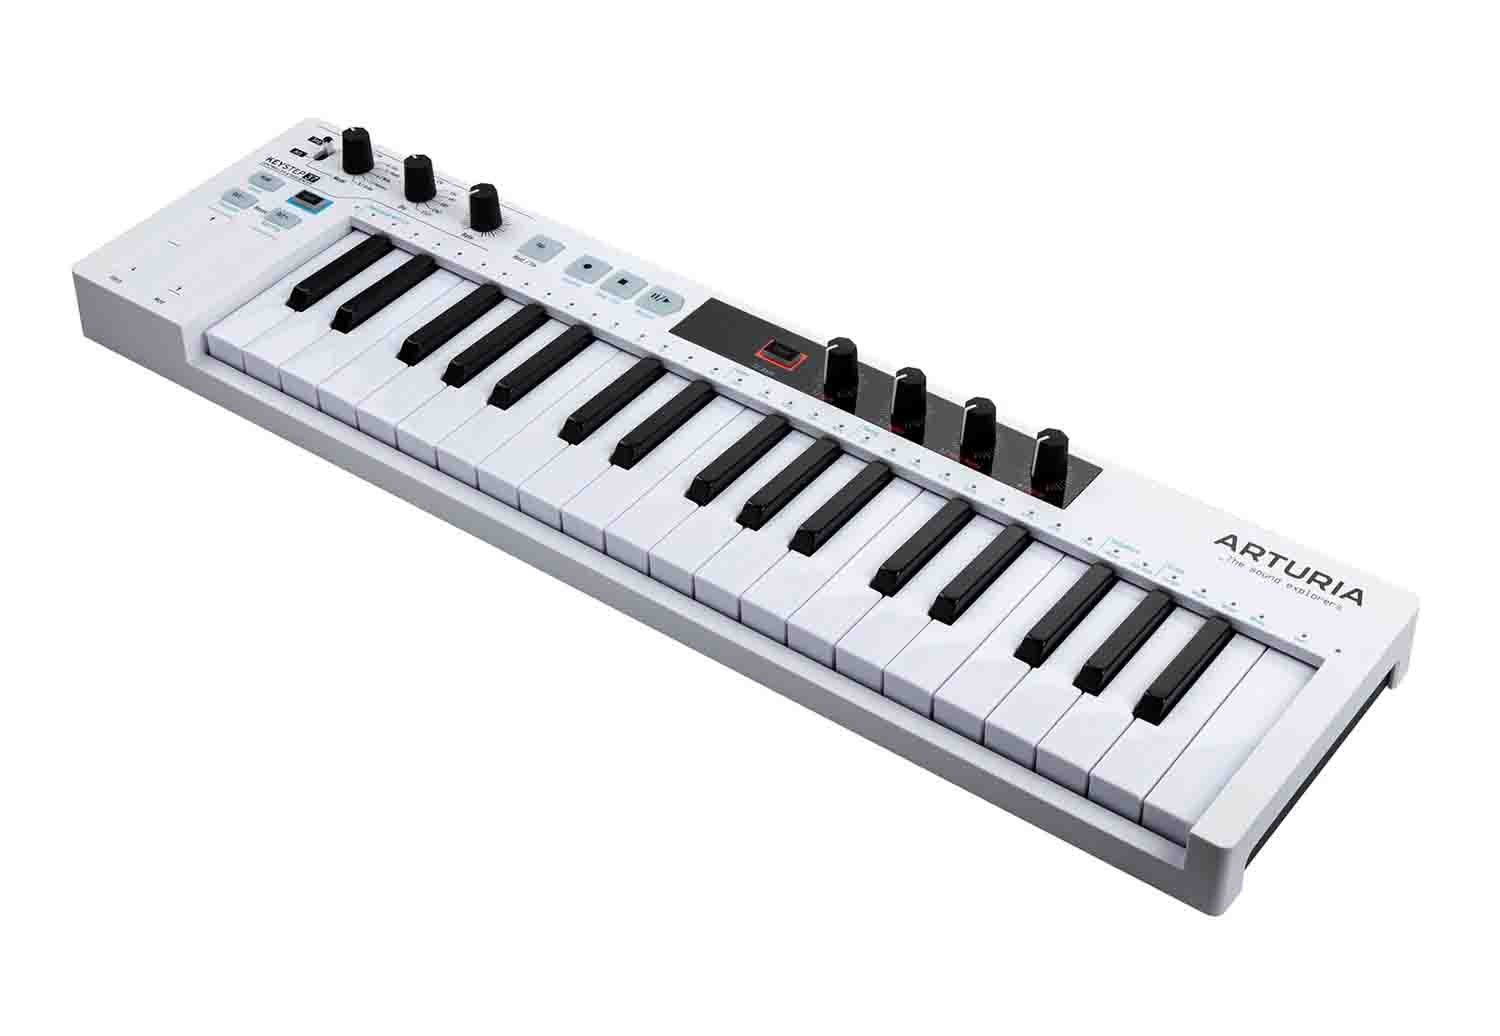 Arturia KEYSTEP 37 MIDI Keyboard Controller with Decksaver Protective Cover Bundle - Hollywood DJ